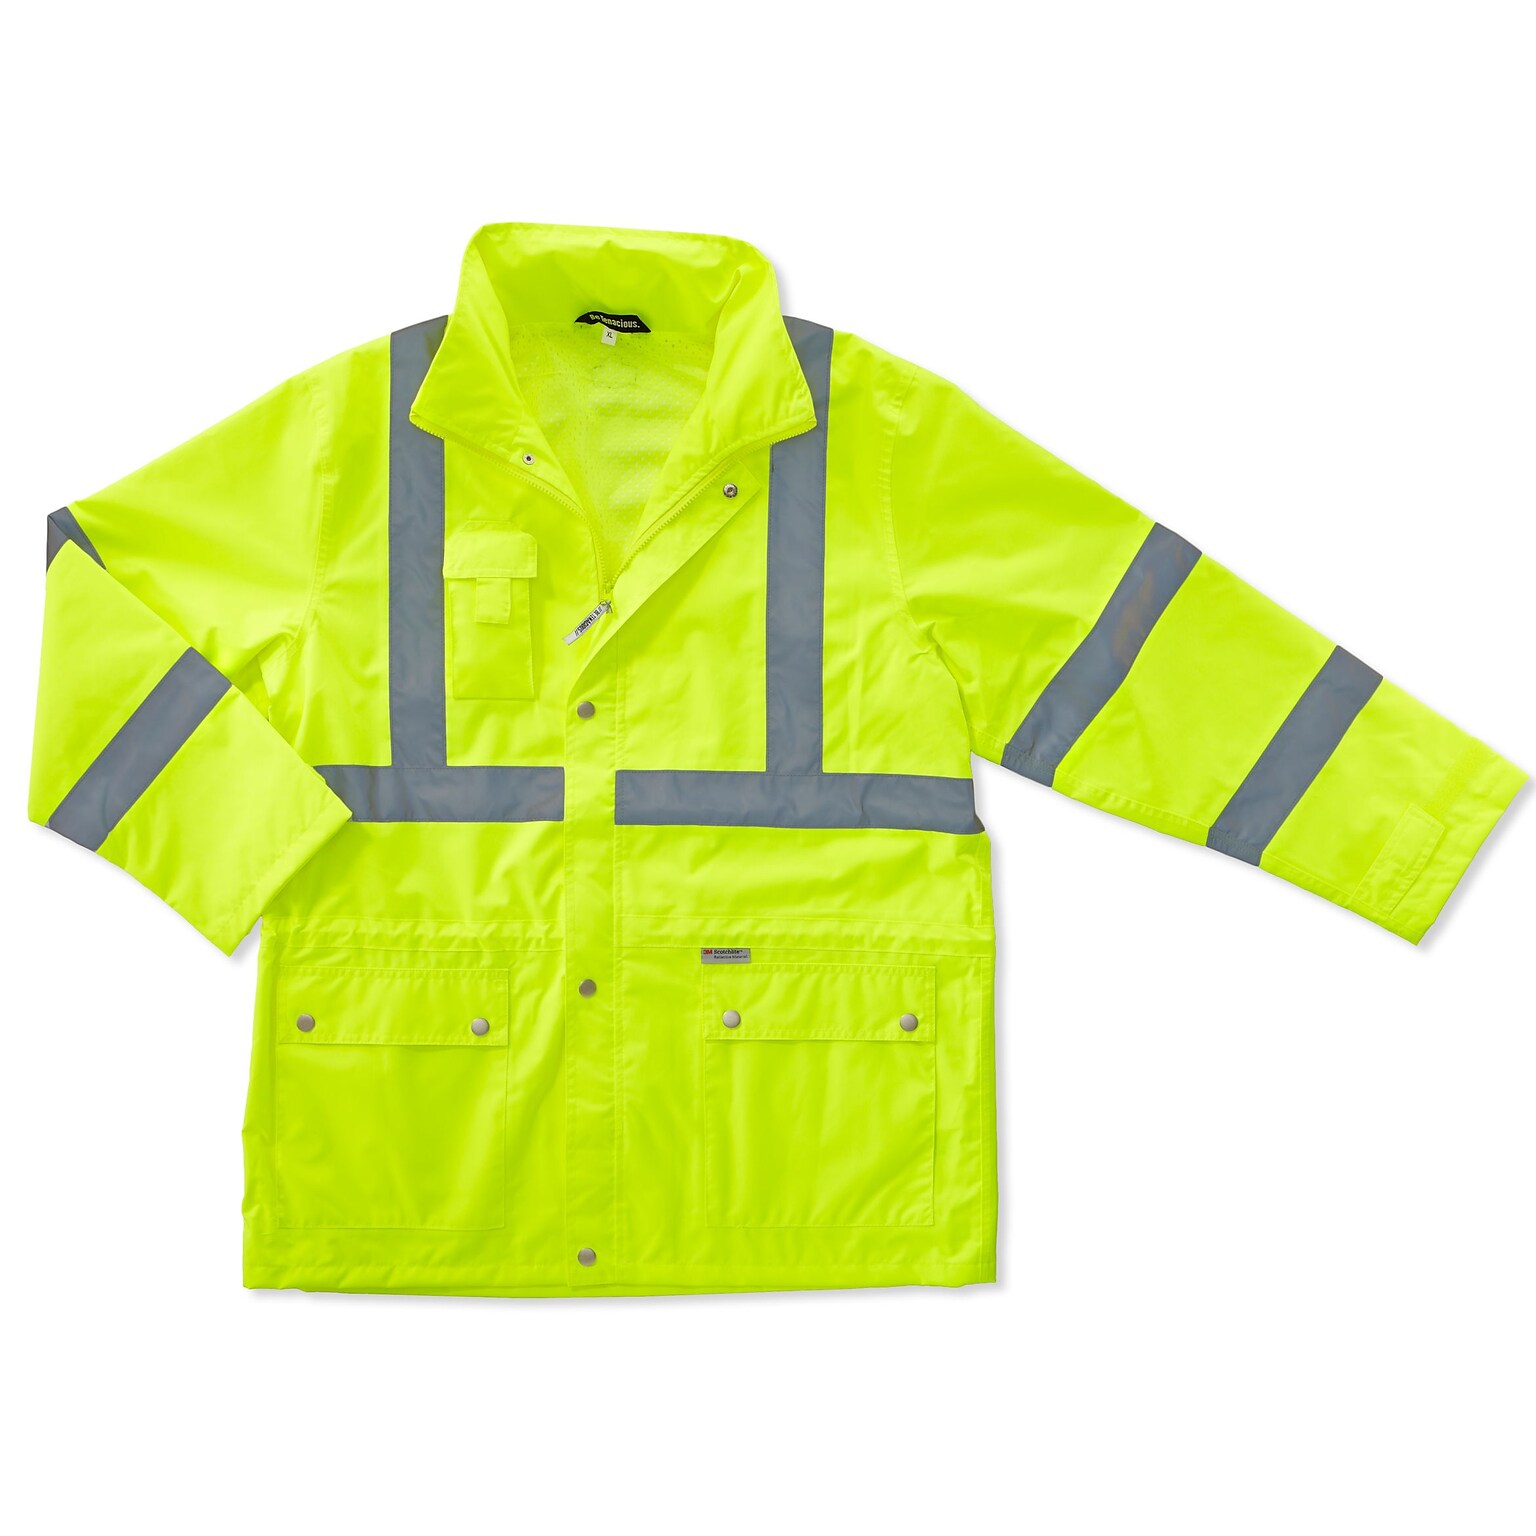 Ergodyne GloWear 8365 High Visibility Rain Jacket, ANSI Class R3, Lime, 2XL